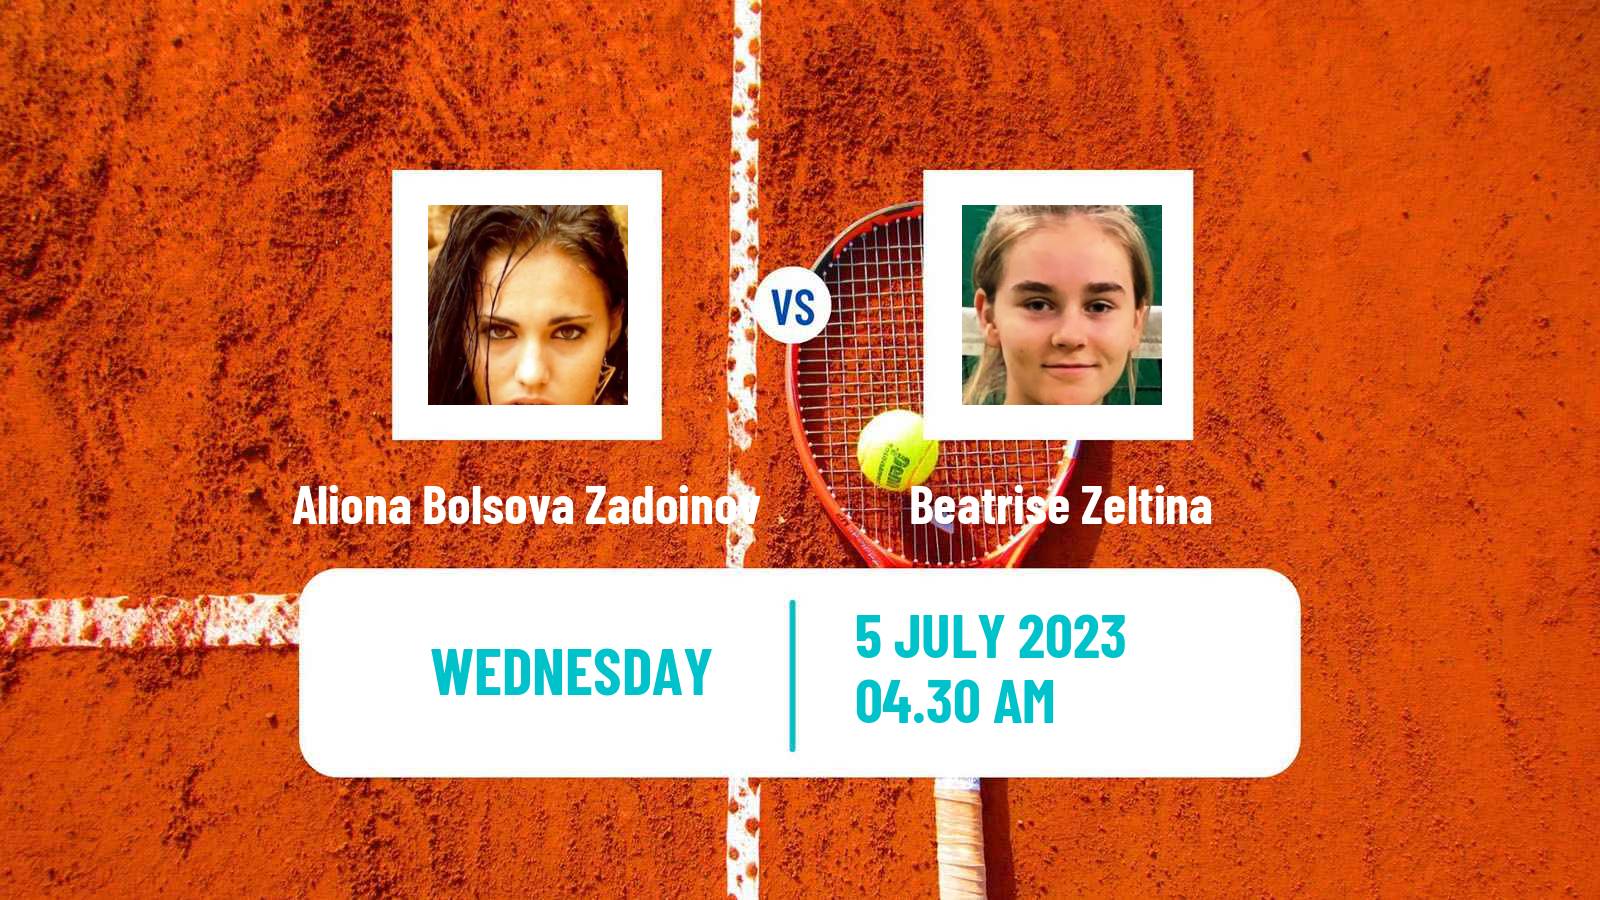 Tennis ITF W60 Liepaja Women Aliona Bolsova Zadoinov - Beatrise Zeltina